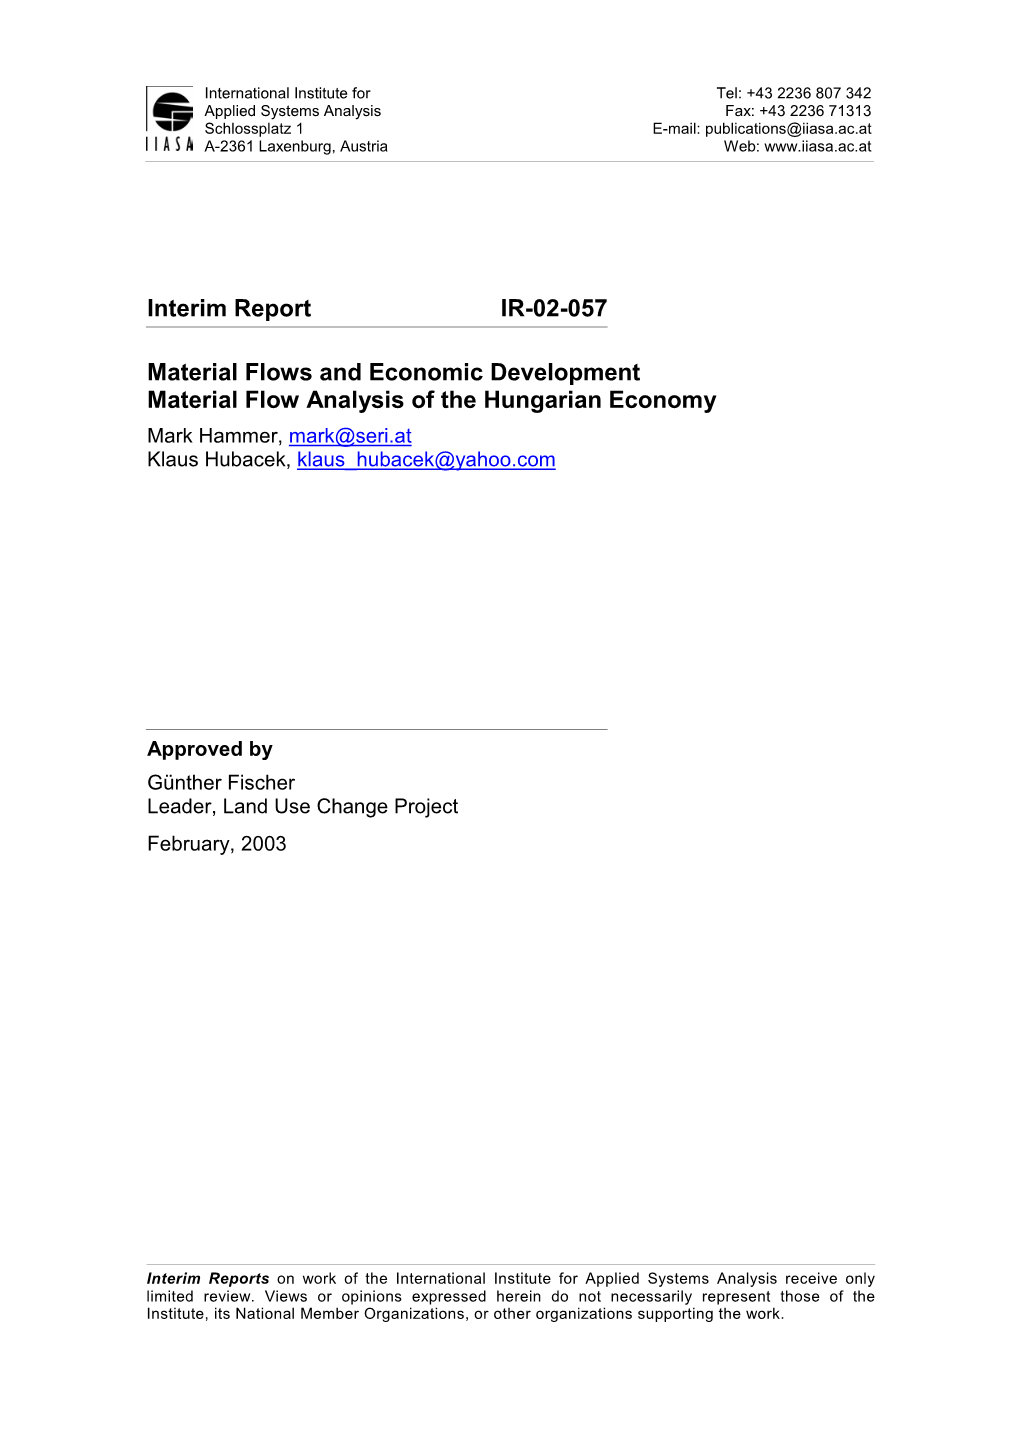 Interim Report IR-02-057 Material Flows and Economic Development